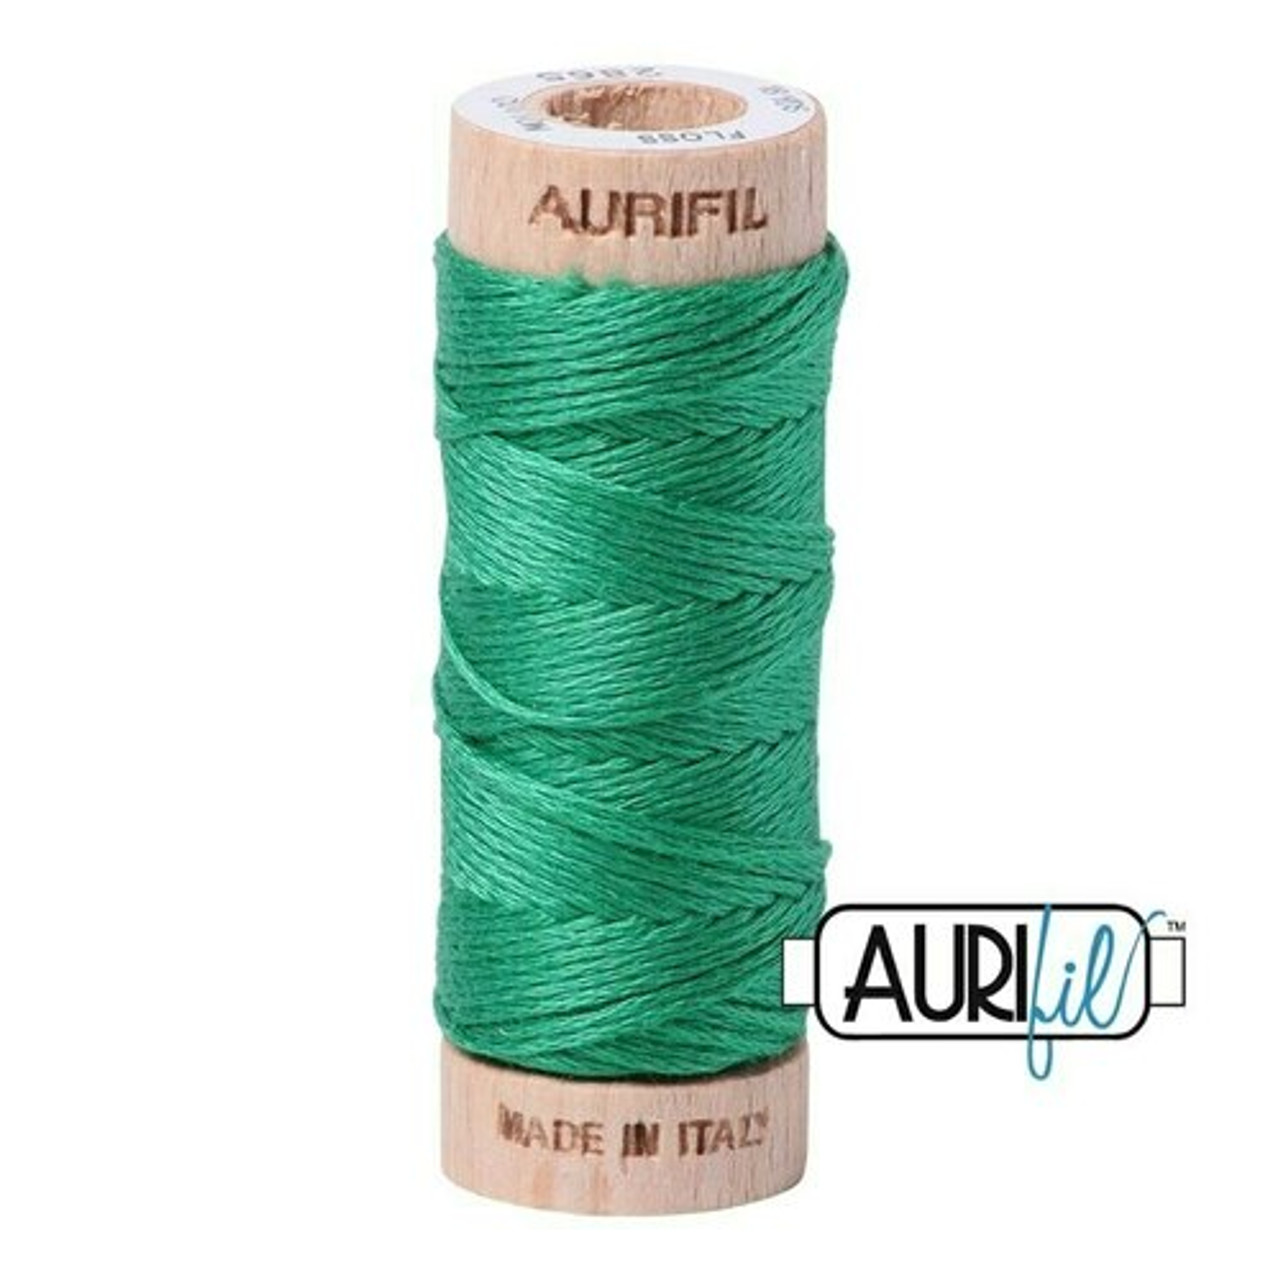 Aurifil 2865 - Emerald